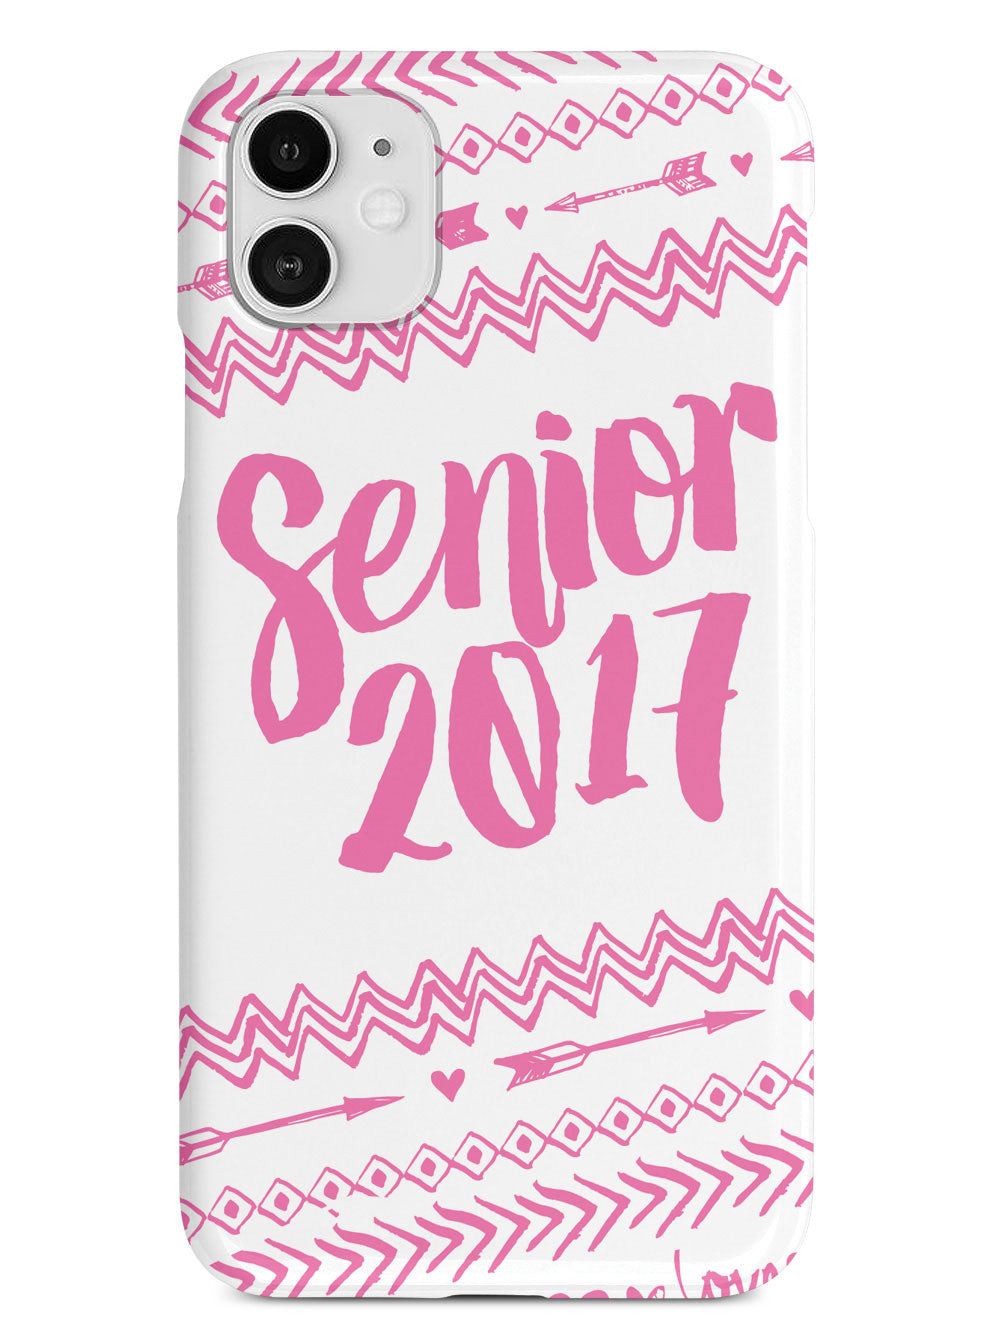 Senior 2017 - Pink Case